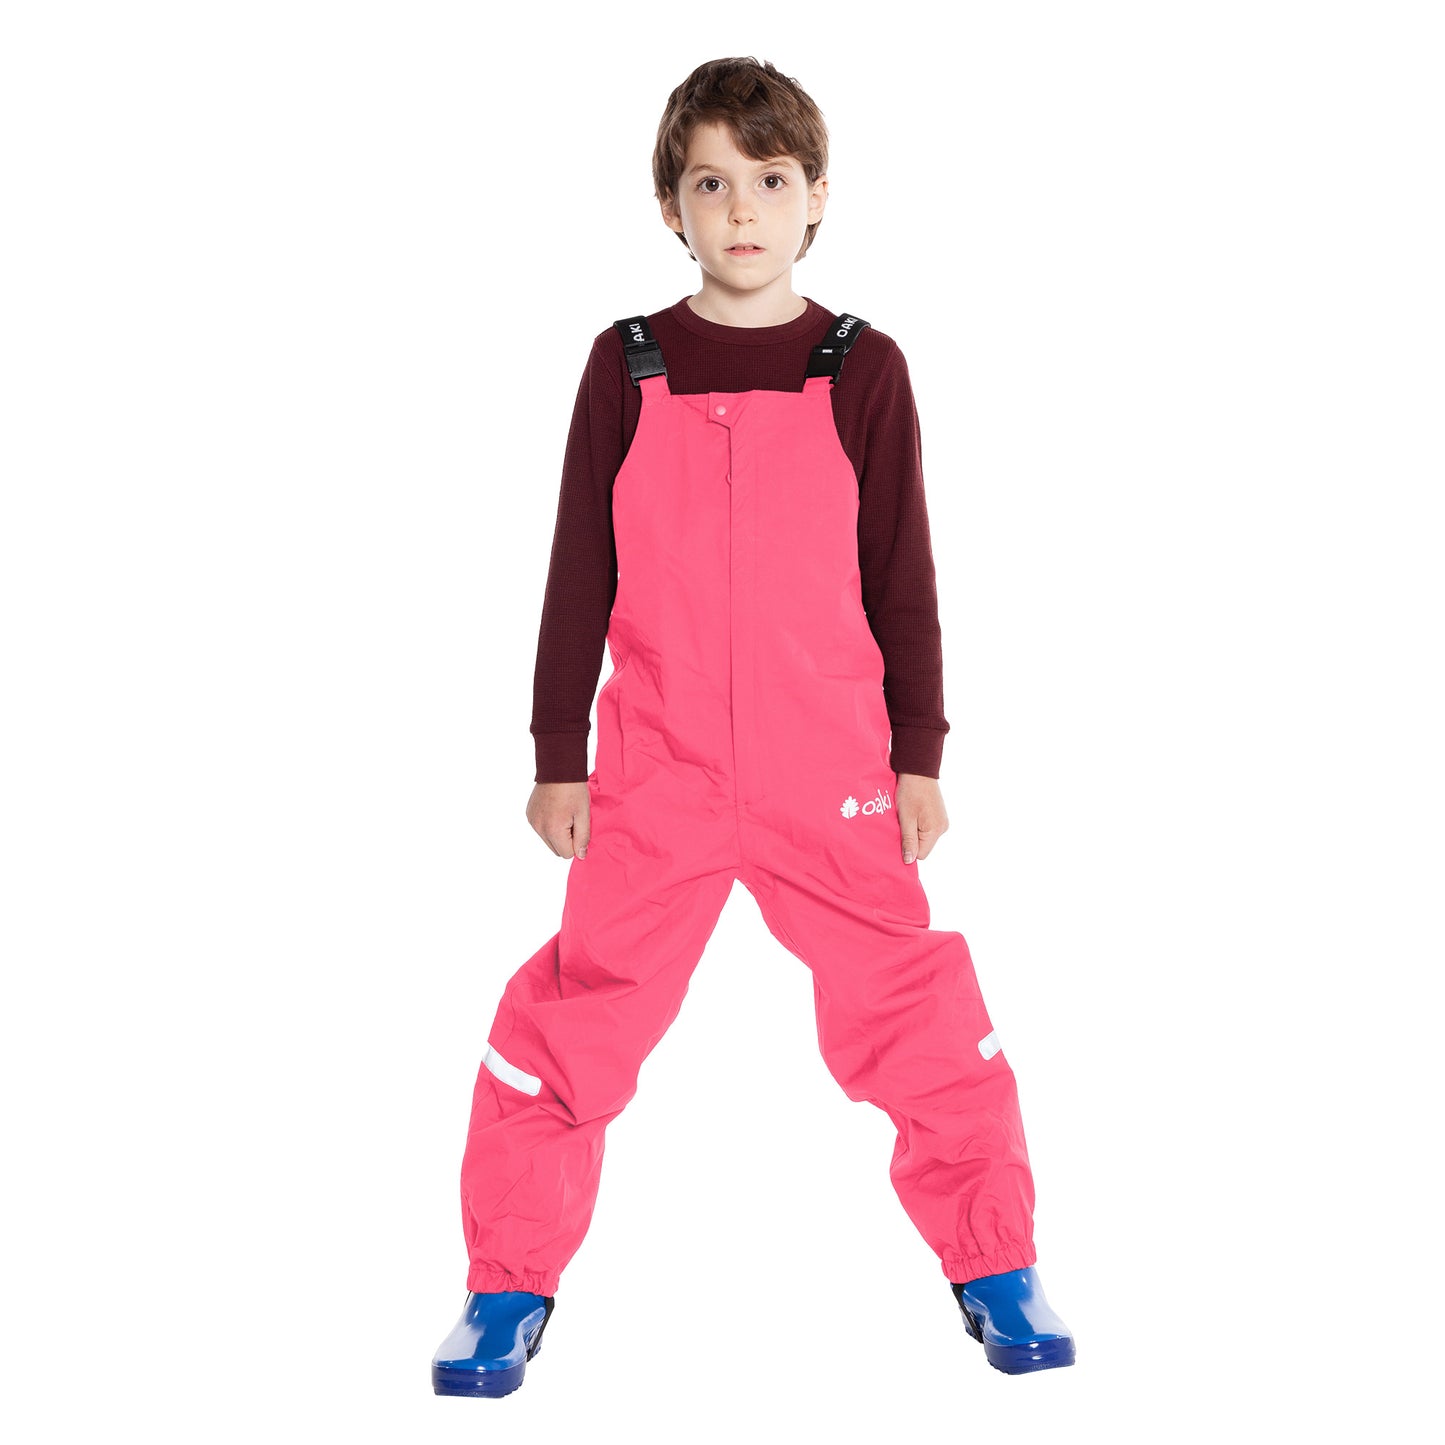 Oakiwear Kids Waterproof Rain Pants Boys Girls, Classic Yellow – Tuff Kids  Outdoors